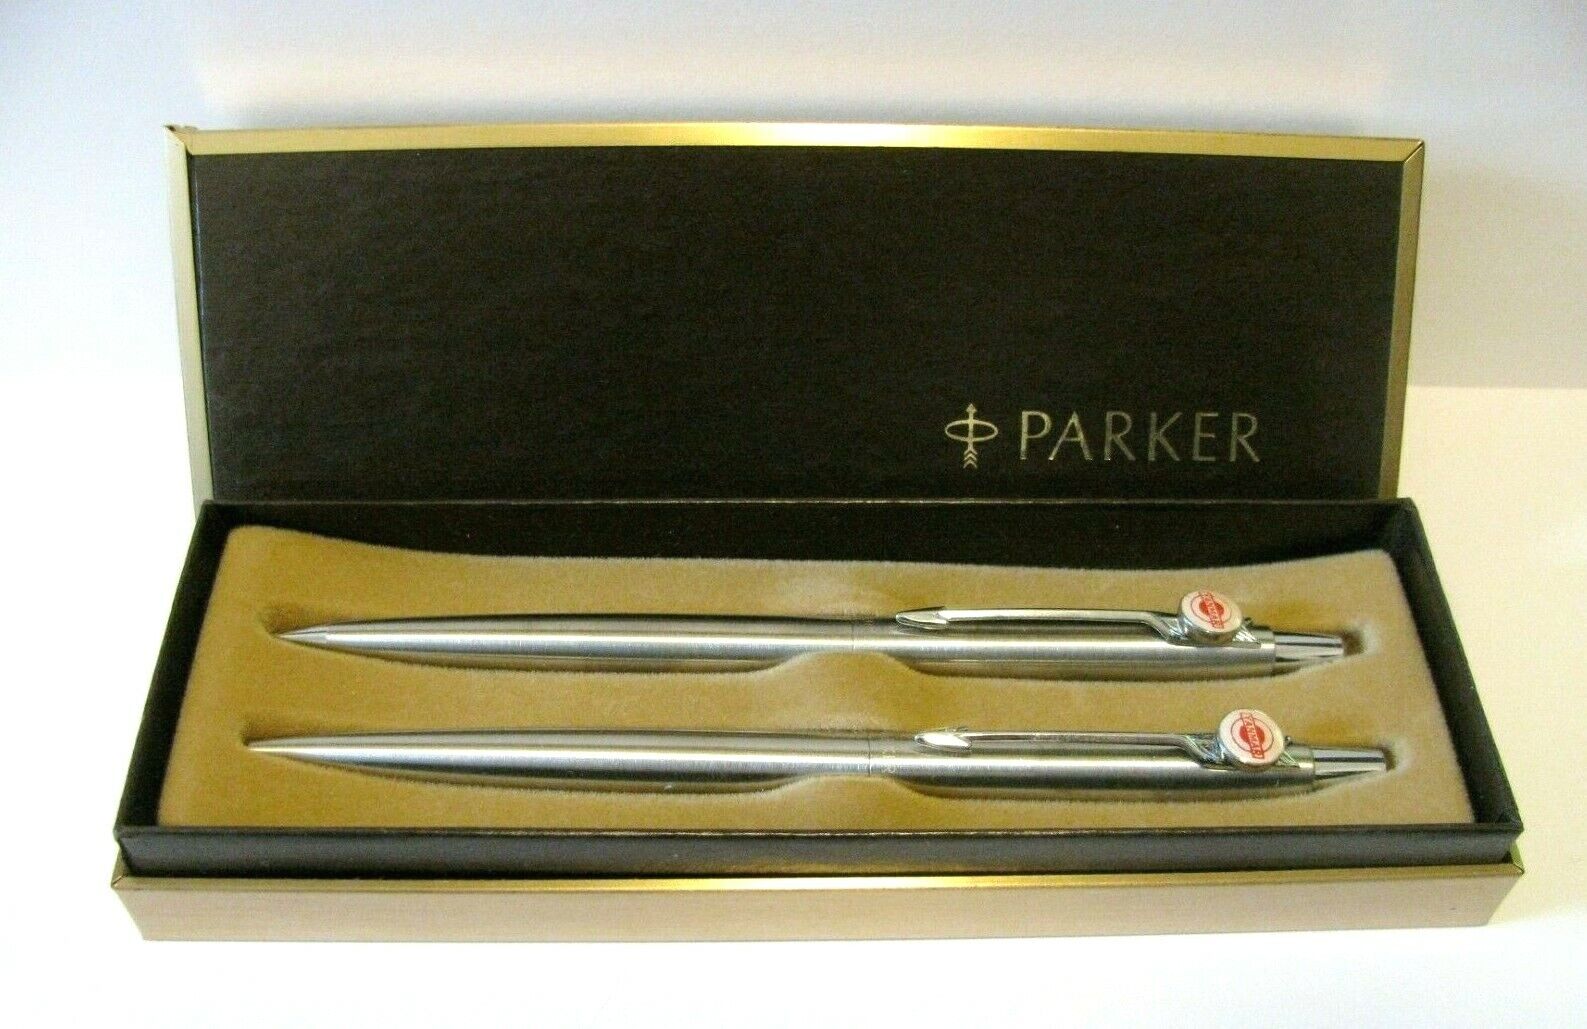 *YANMAR DIESEL ENGINE COMPANY Ink Pen & Mechanical Pencil Set Advertising Parker